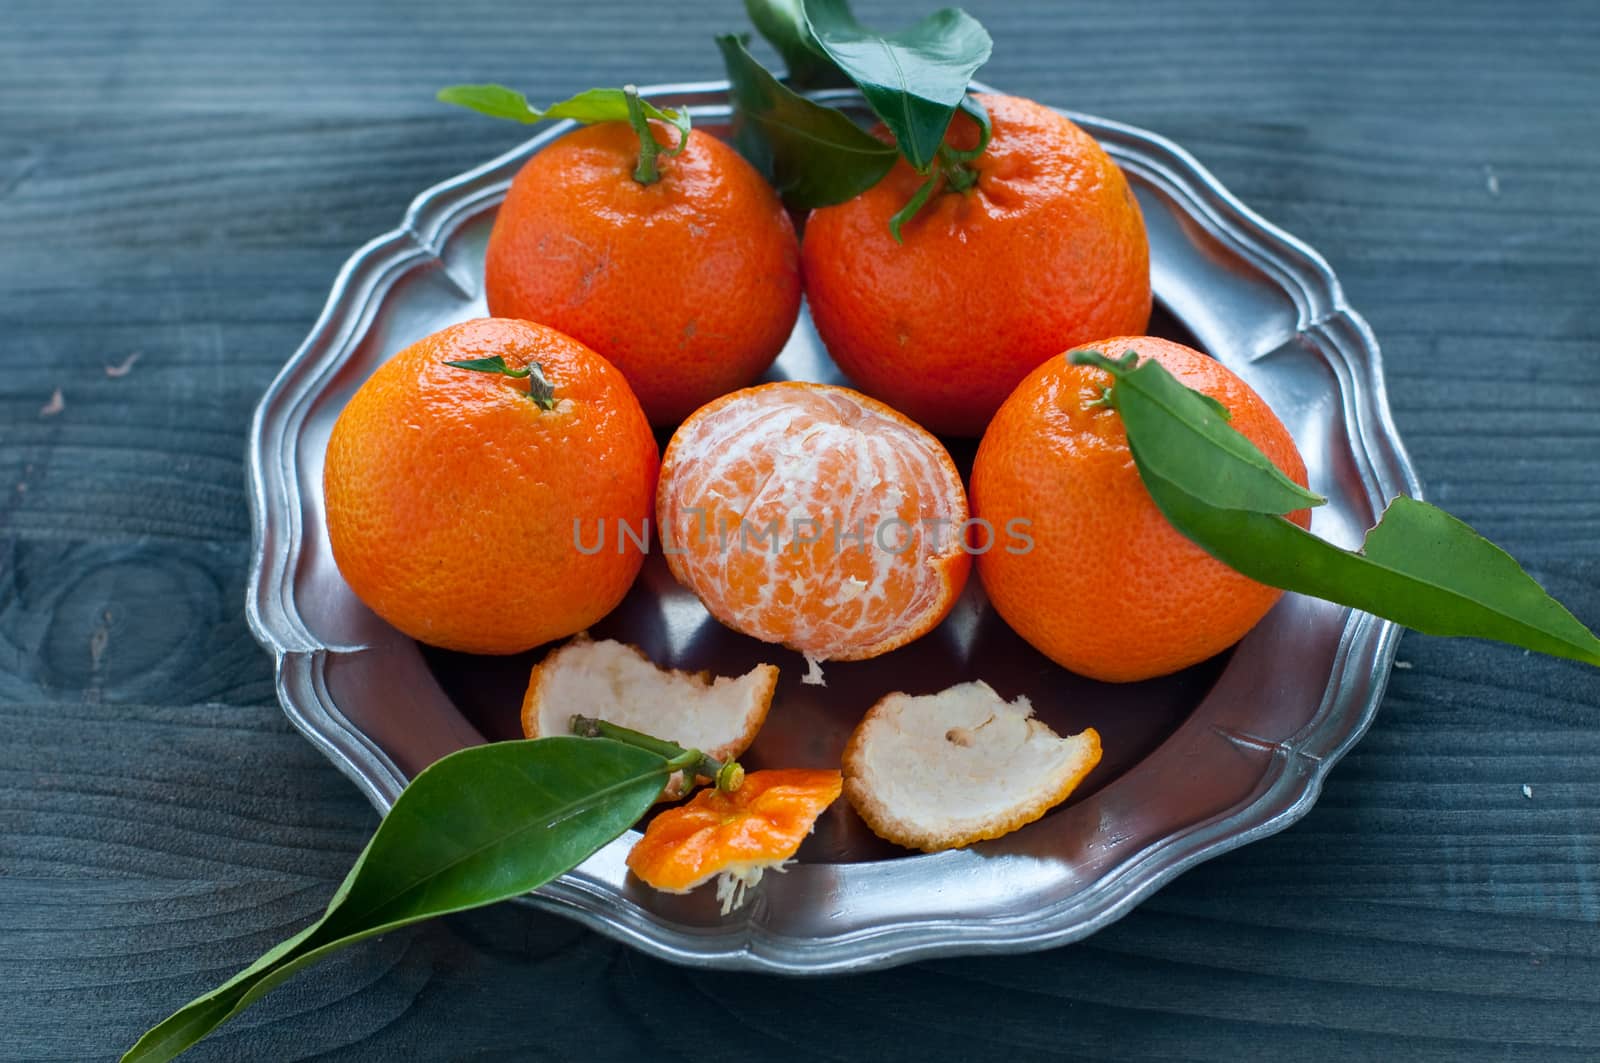 Mandarin orange fruit typical of winter by gringox